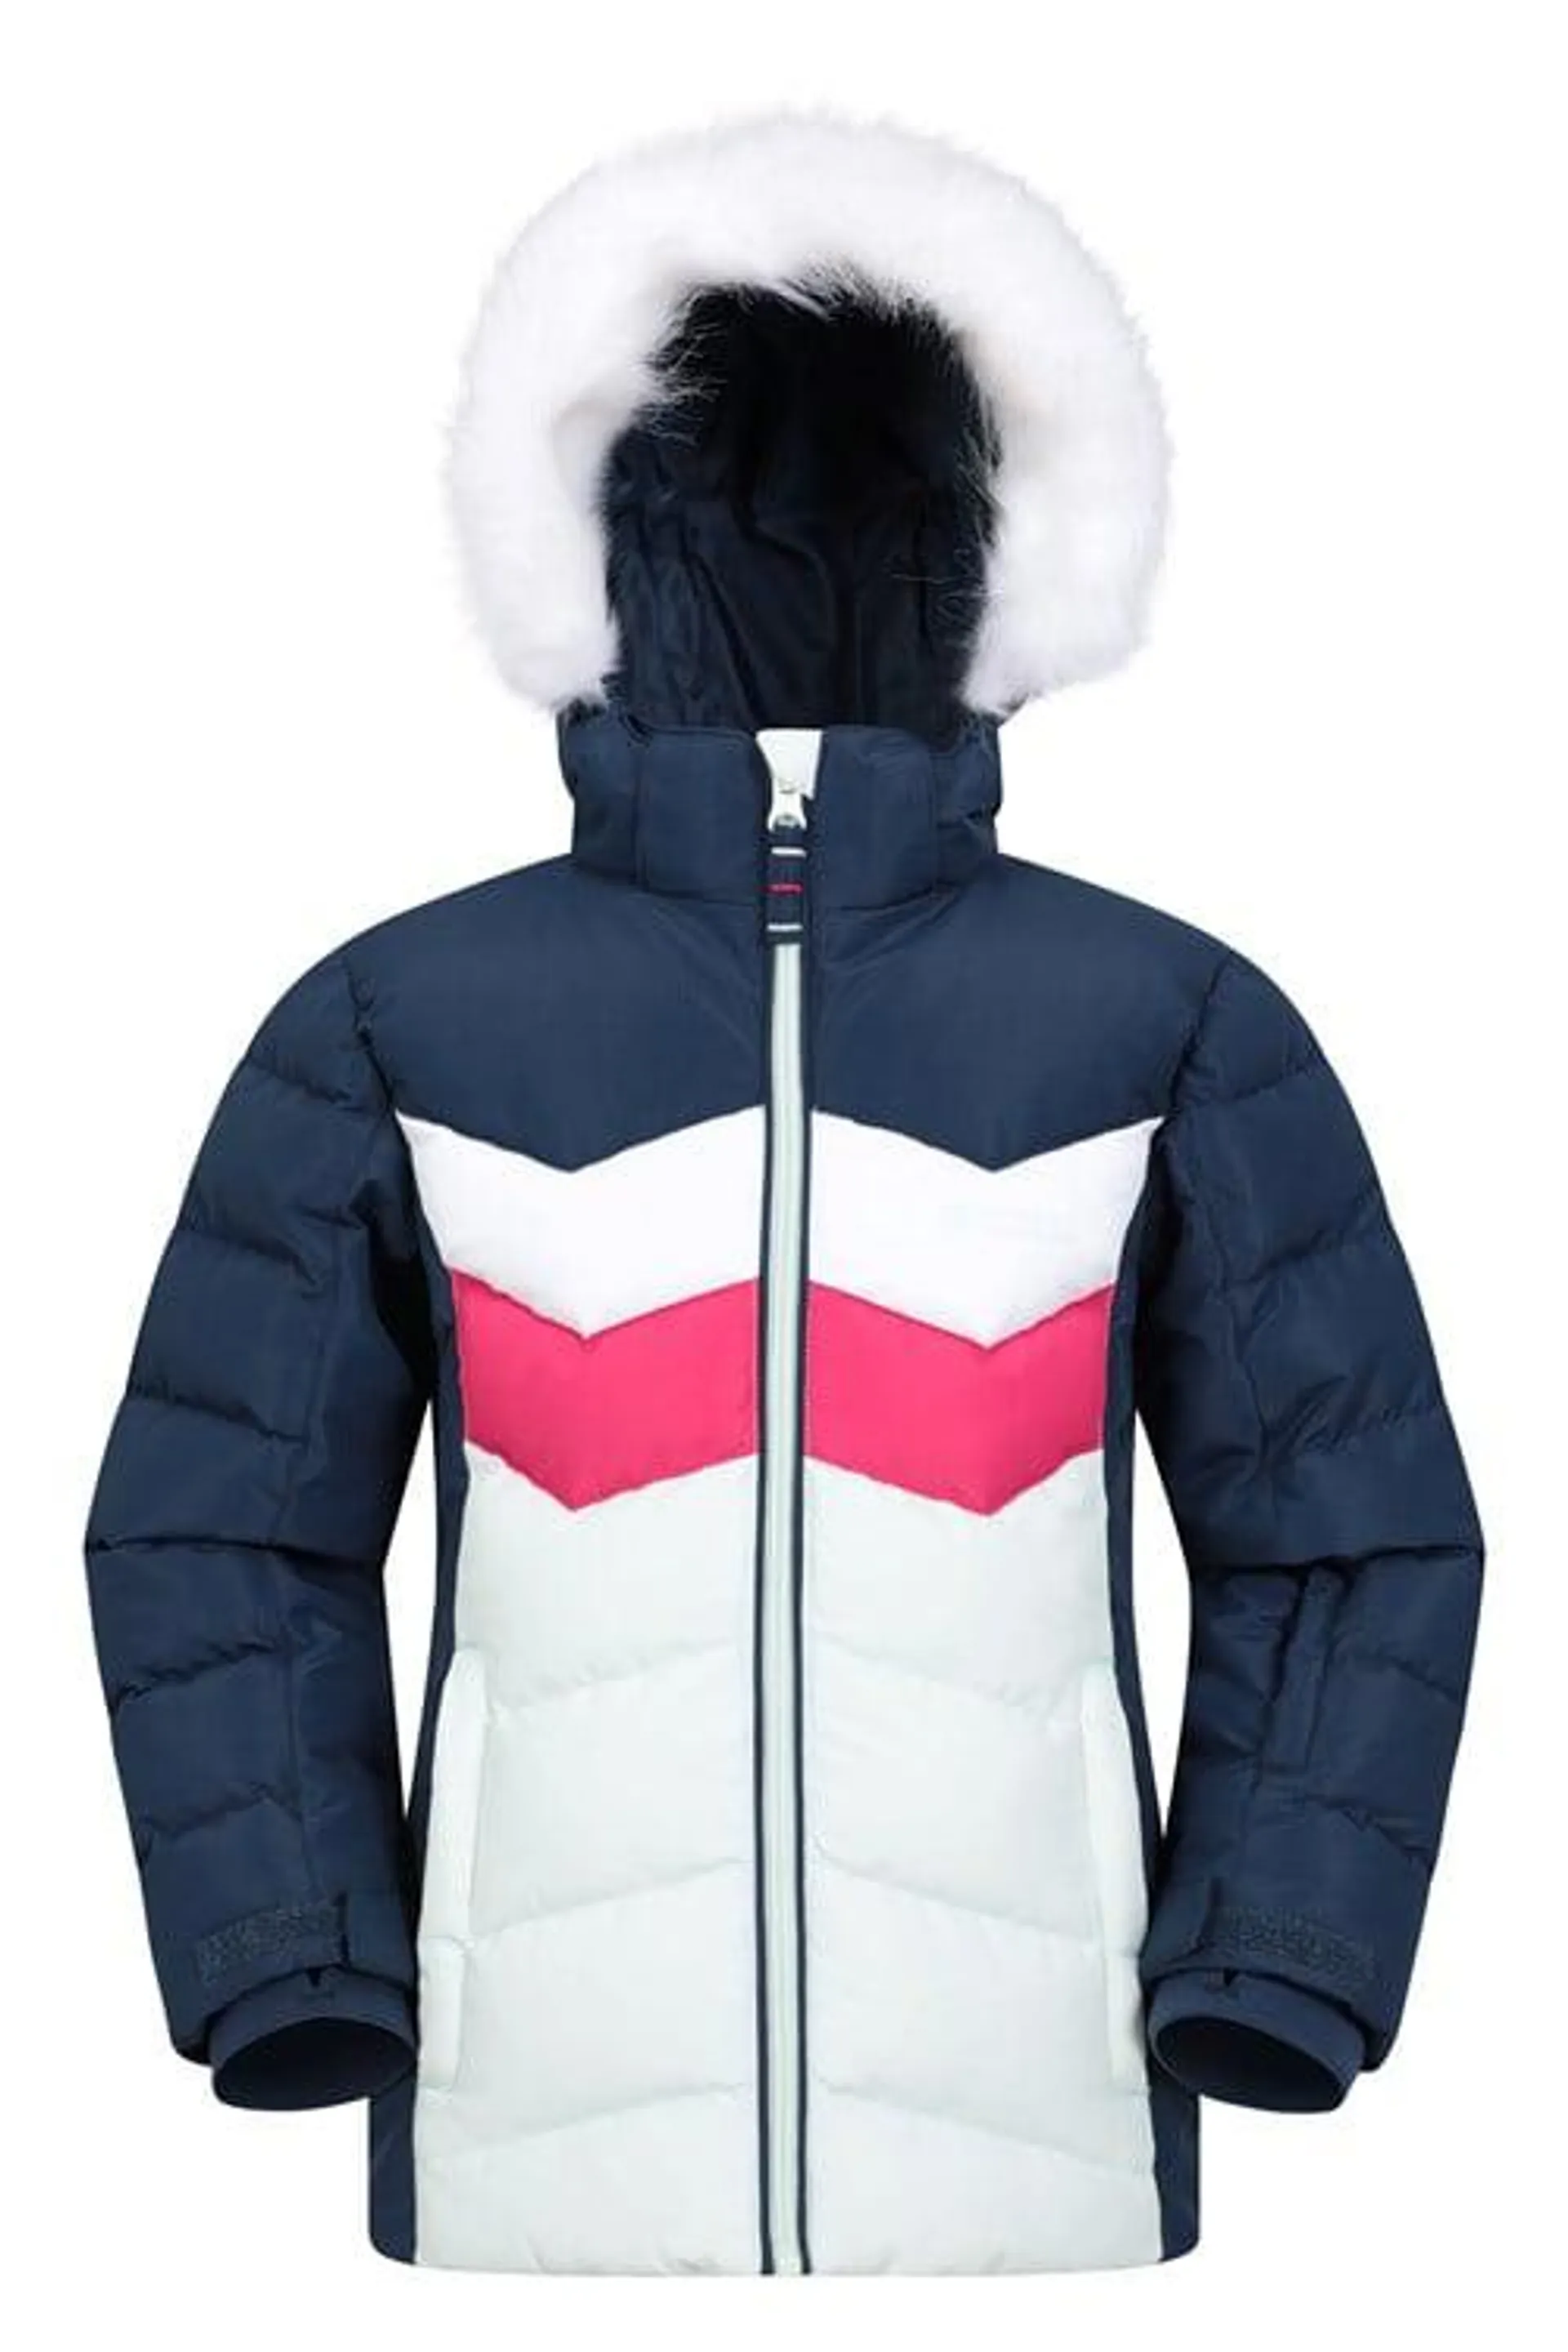 Arctic Kids Water-resistant Ski Jacket